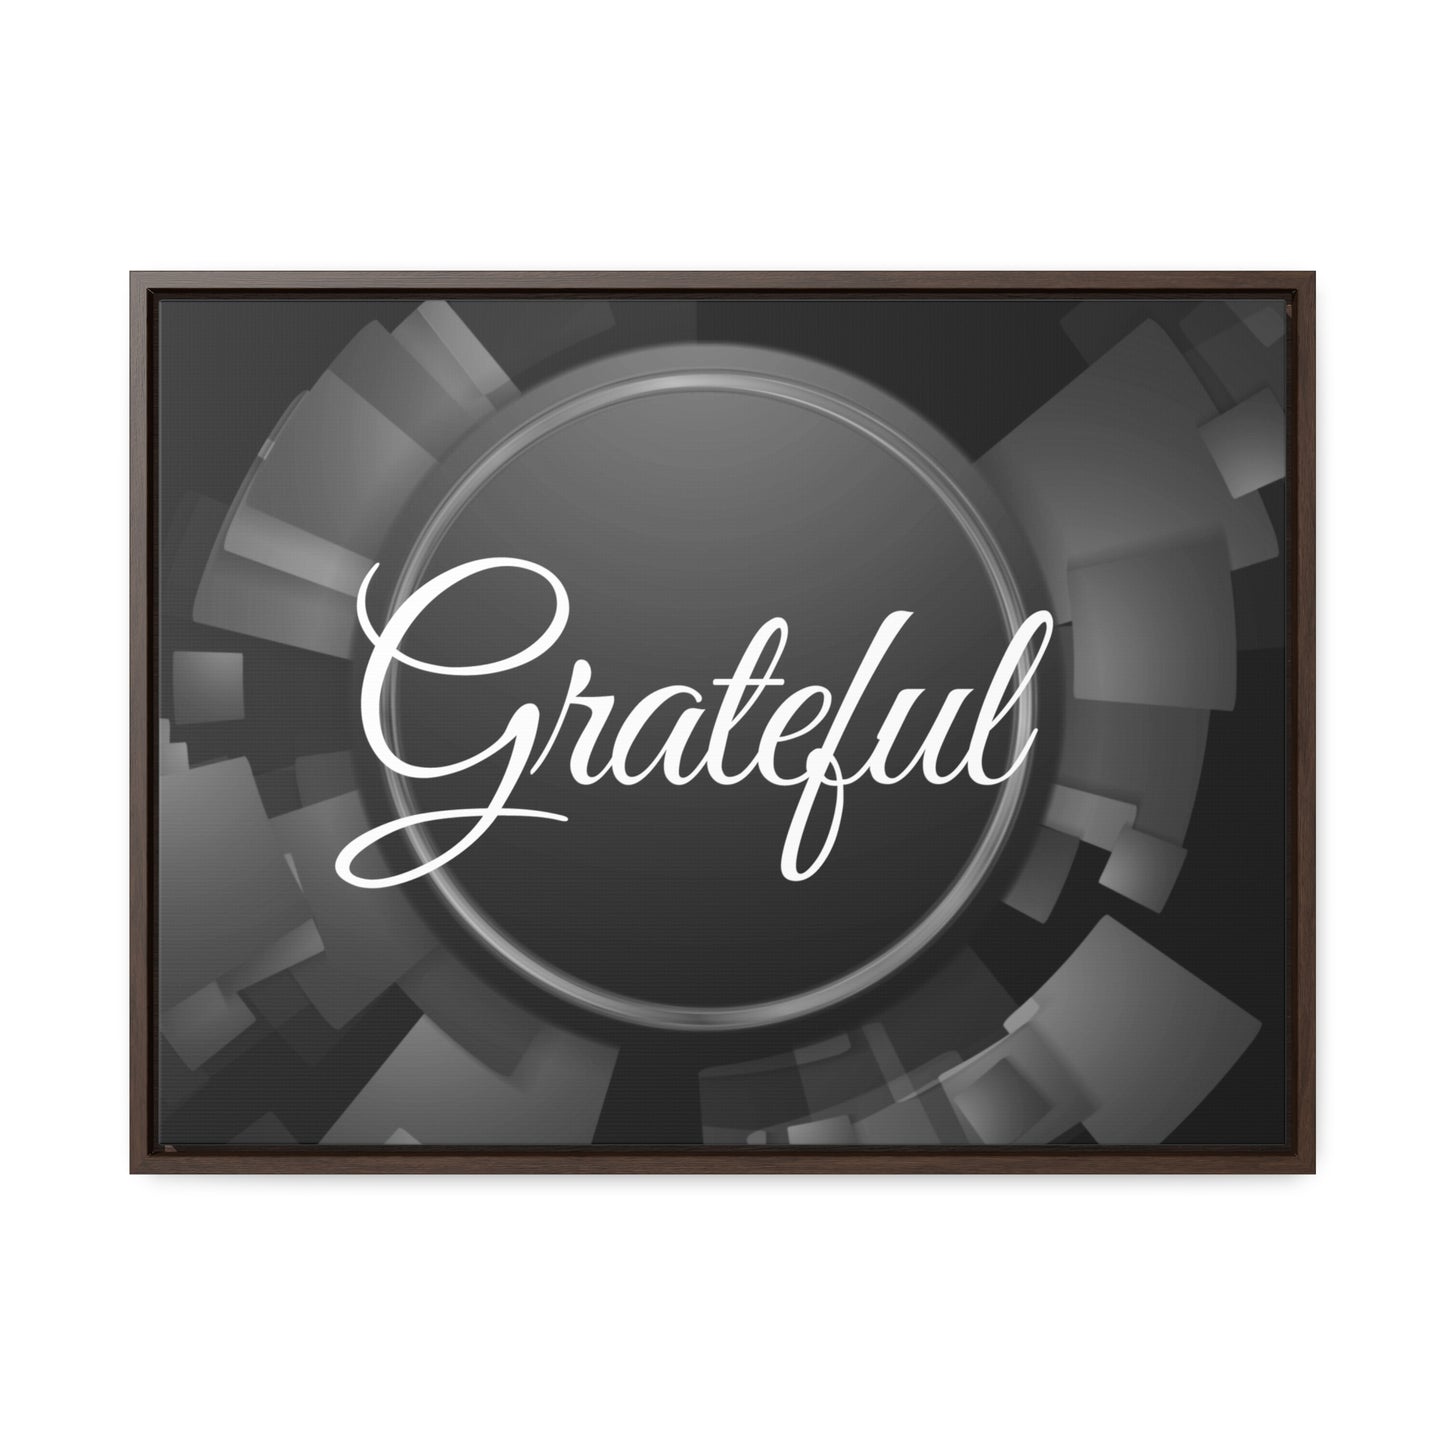 Christian Wall Art: Grateful (Floating Frame)